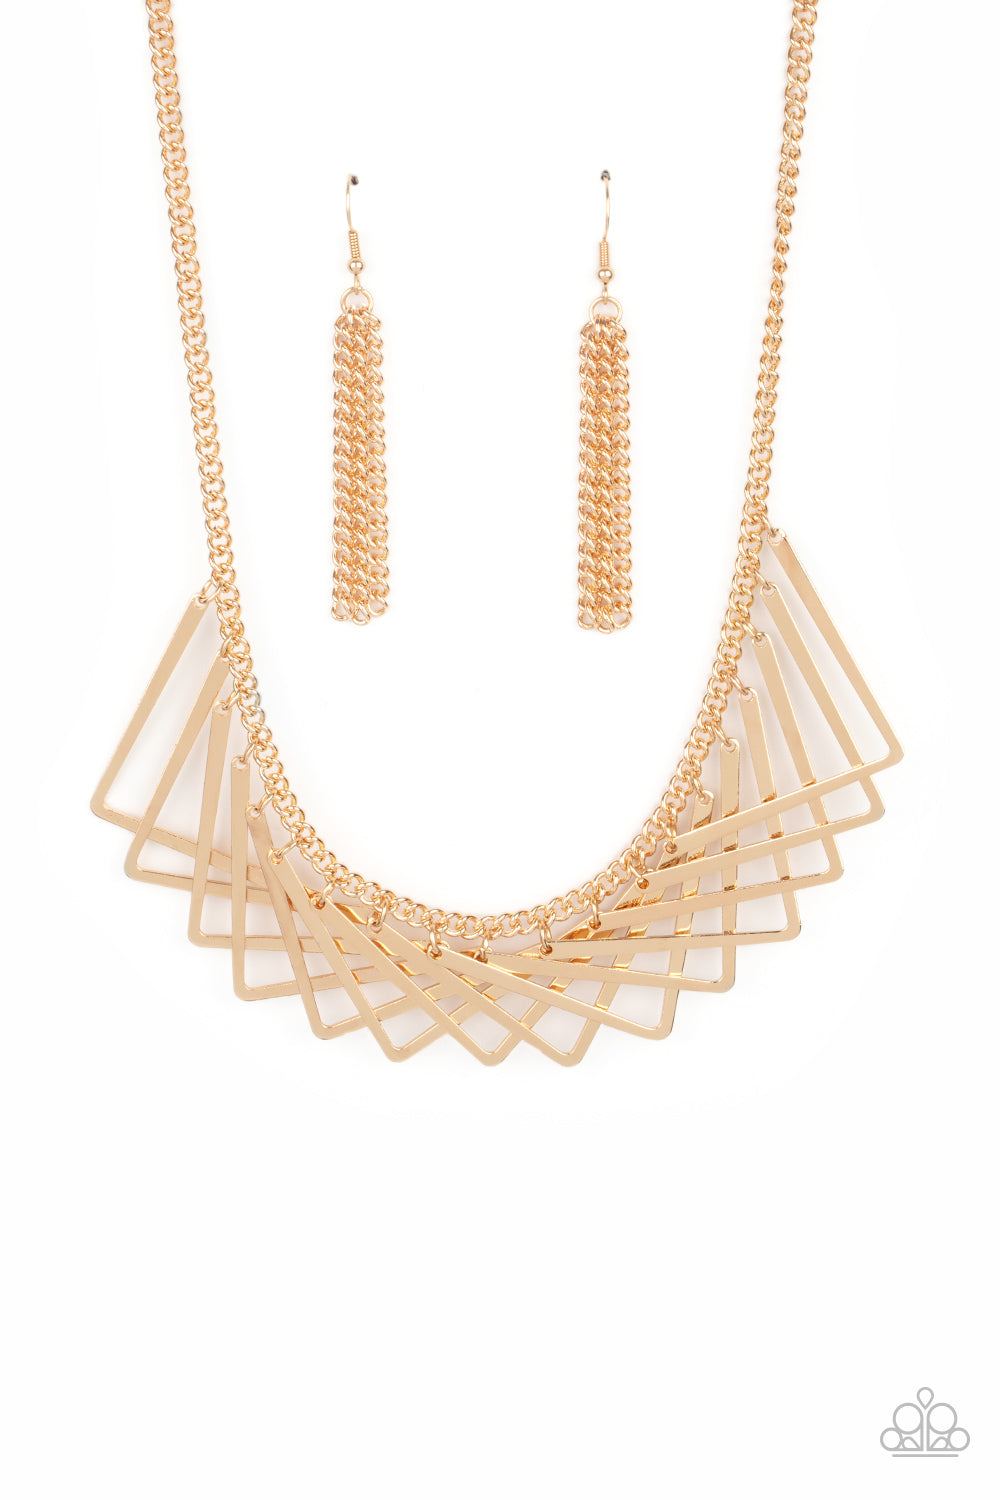 Metro Mirage - Gold Necklace Set - Princess Glam Shop